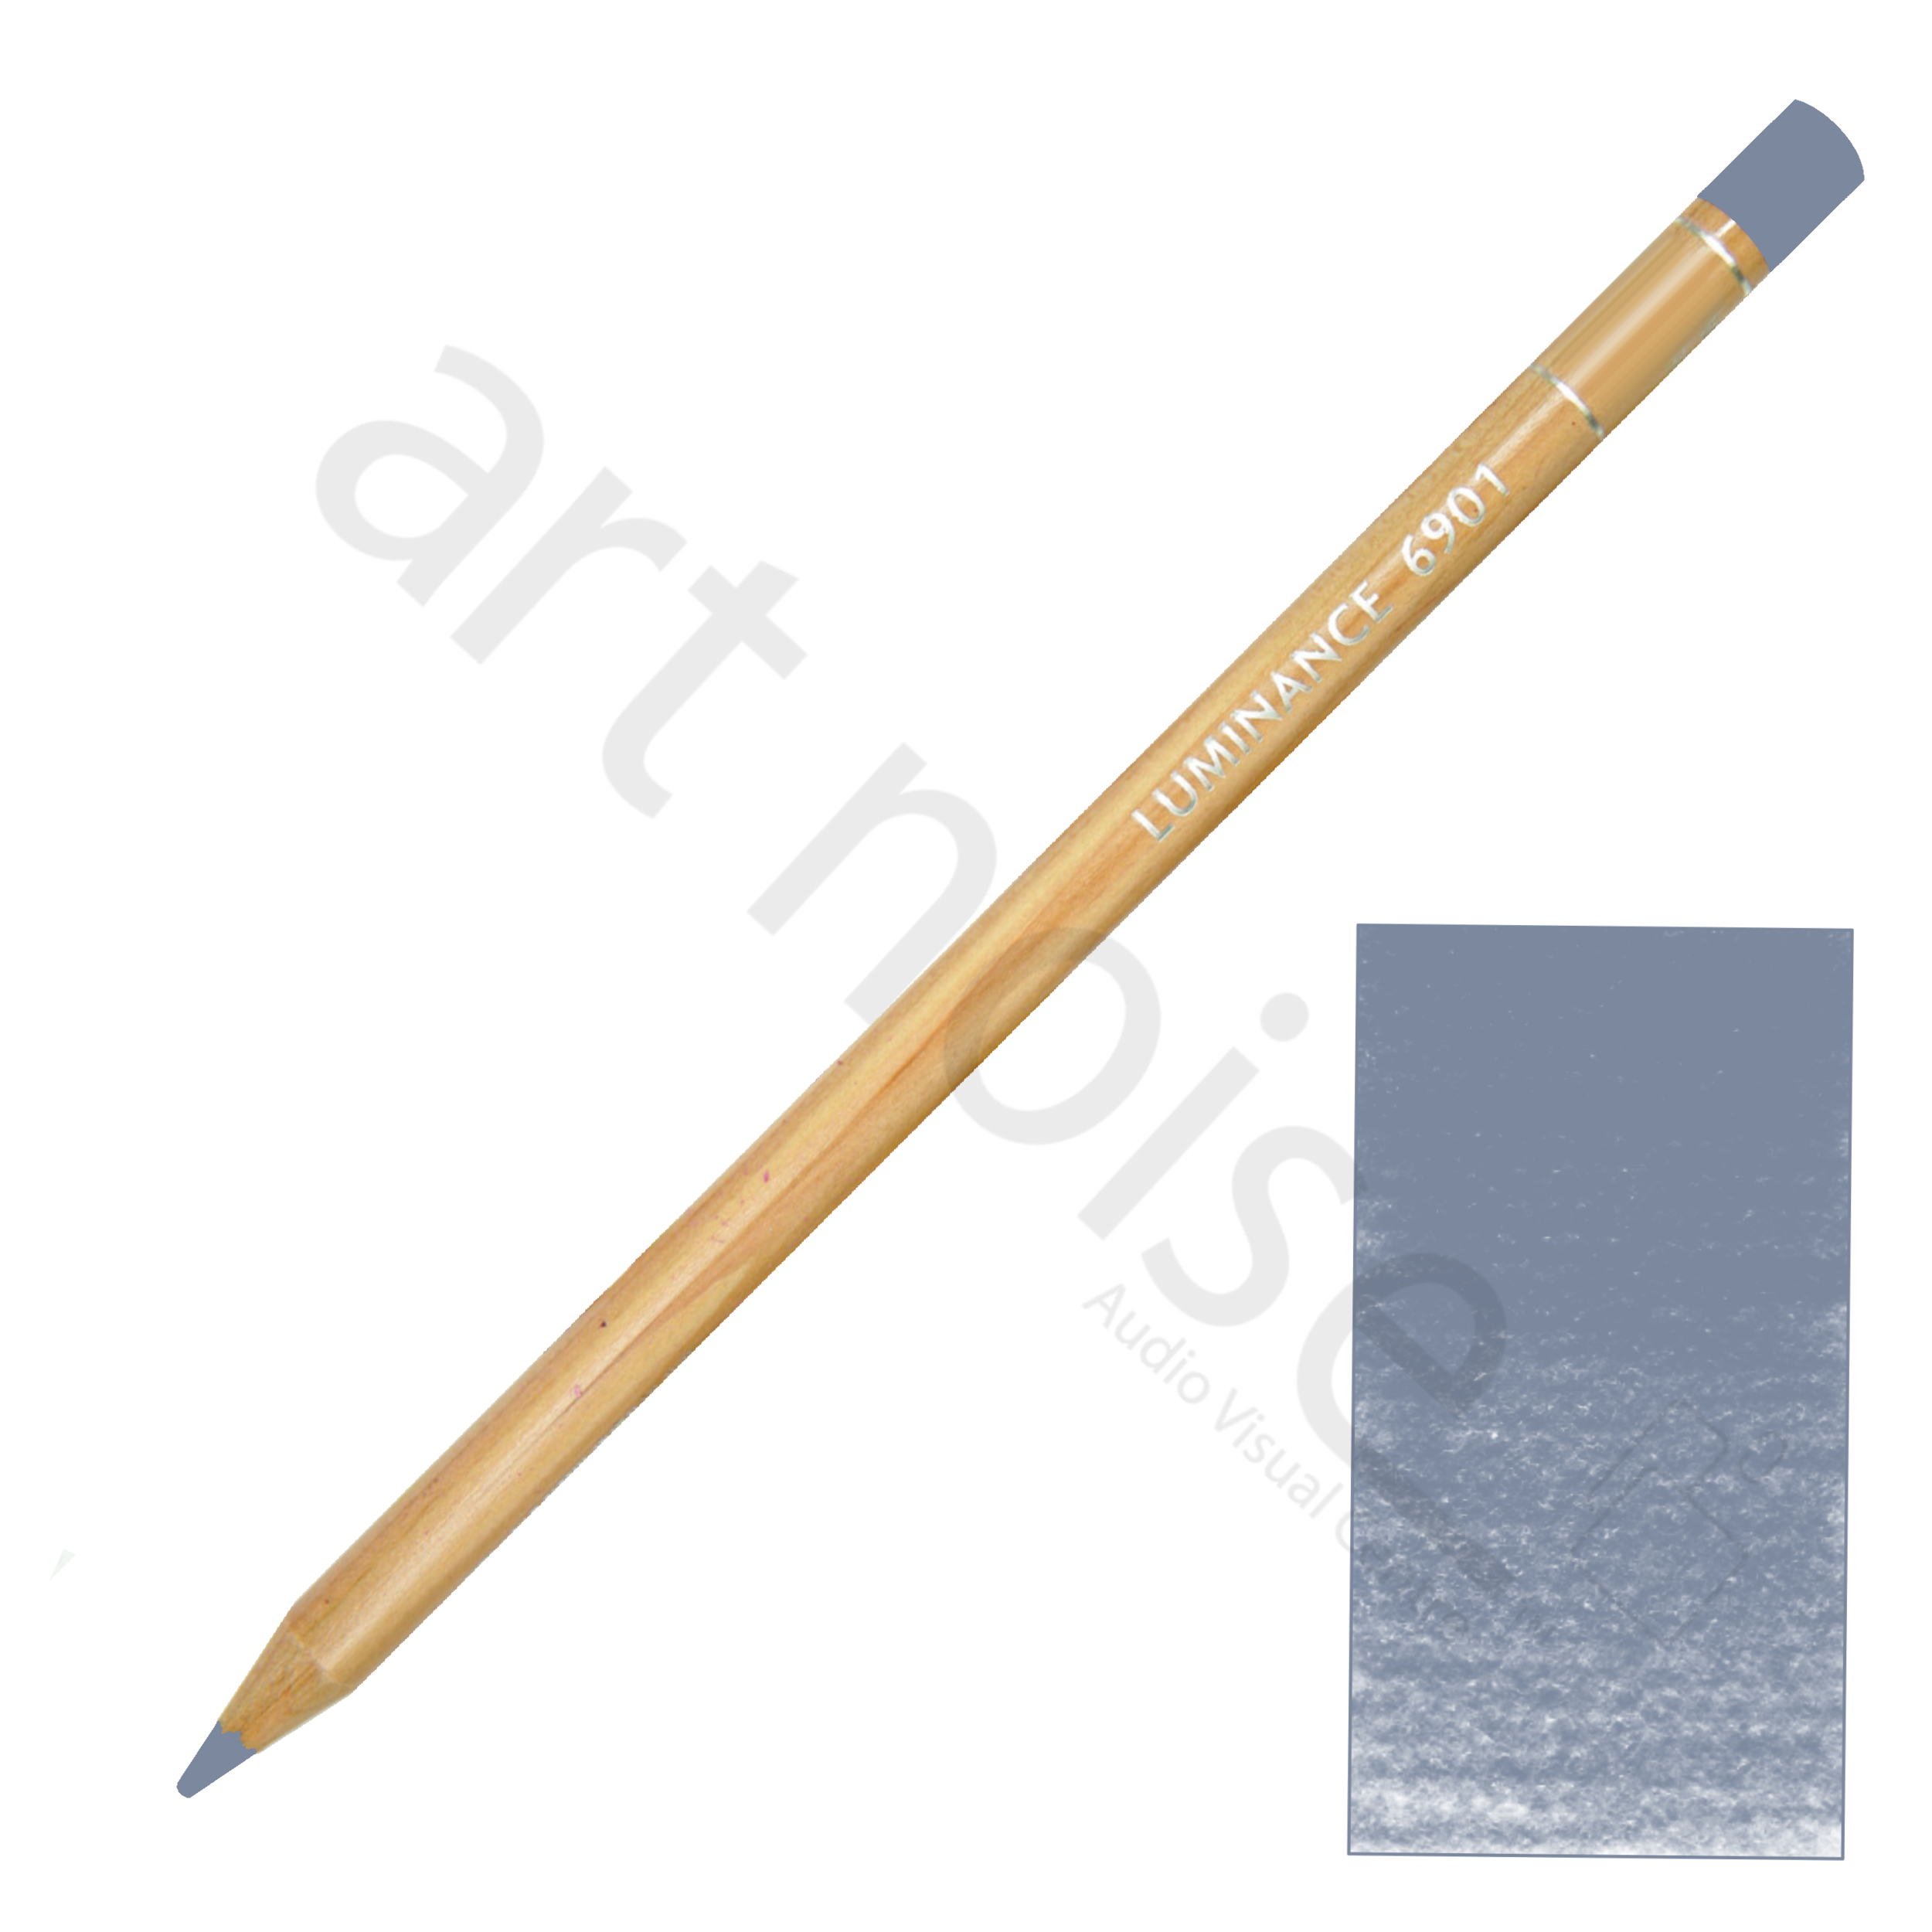 Caran d'Ache Luminance Pencil Grey Blue